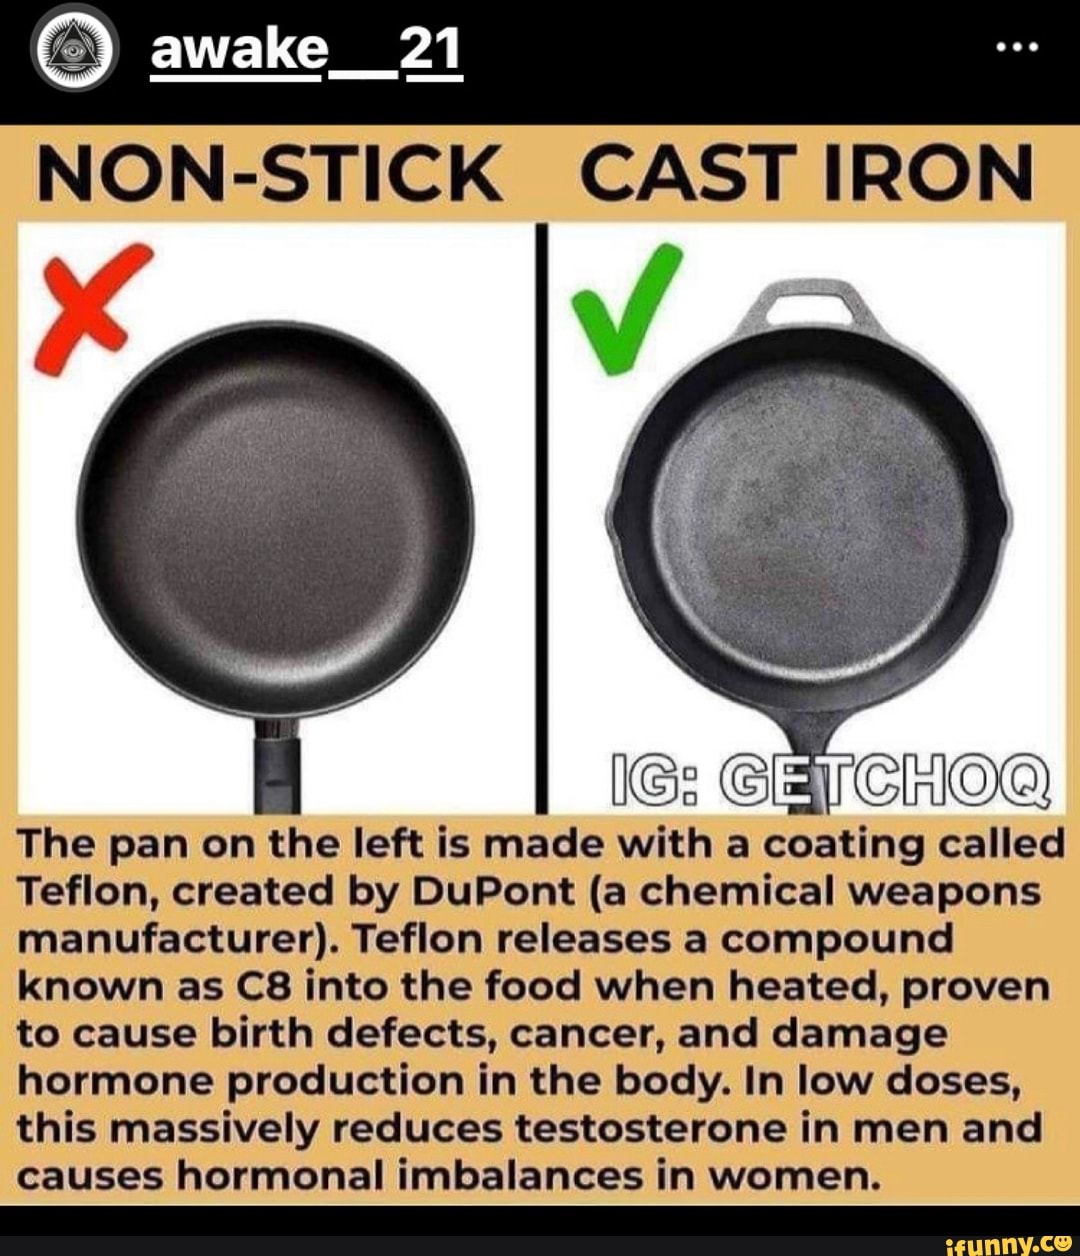 Does Teflon cause cancer?